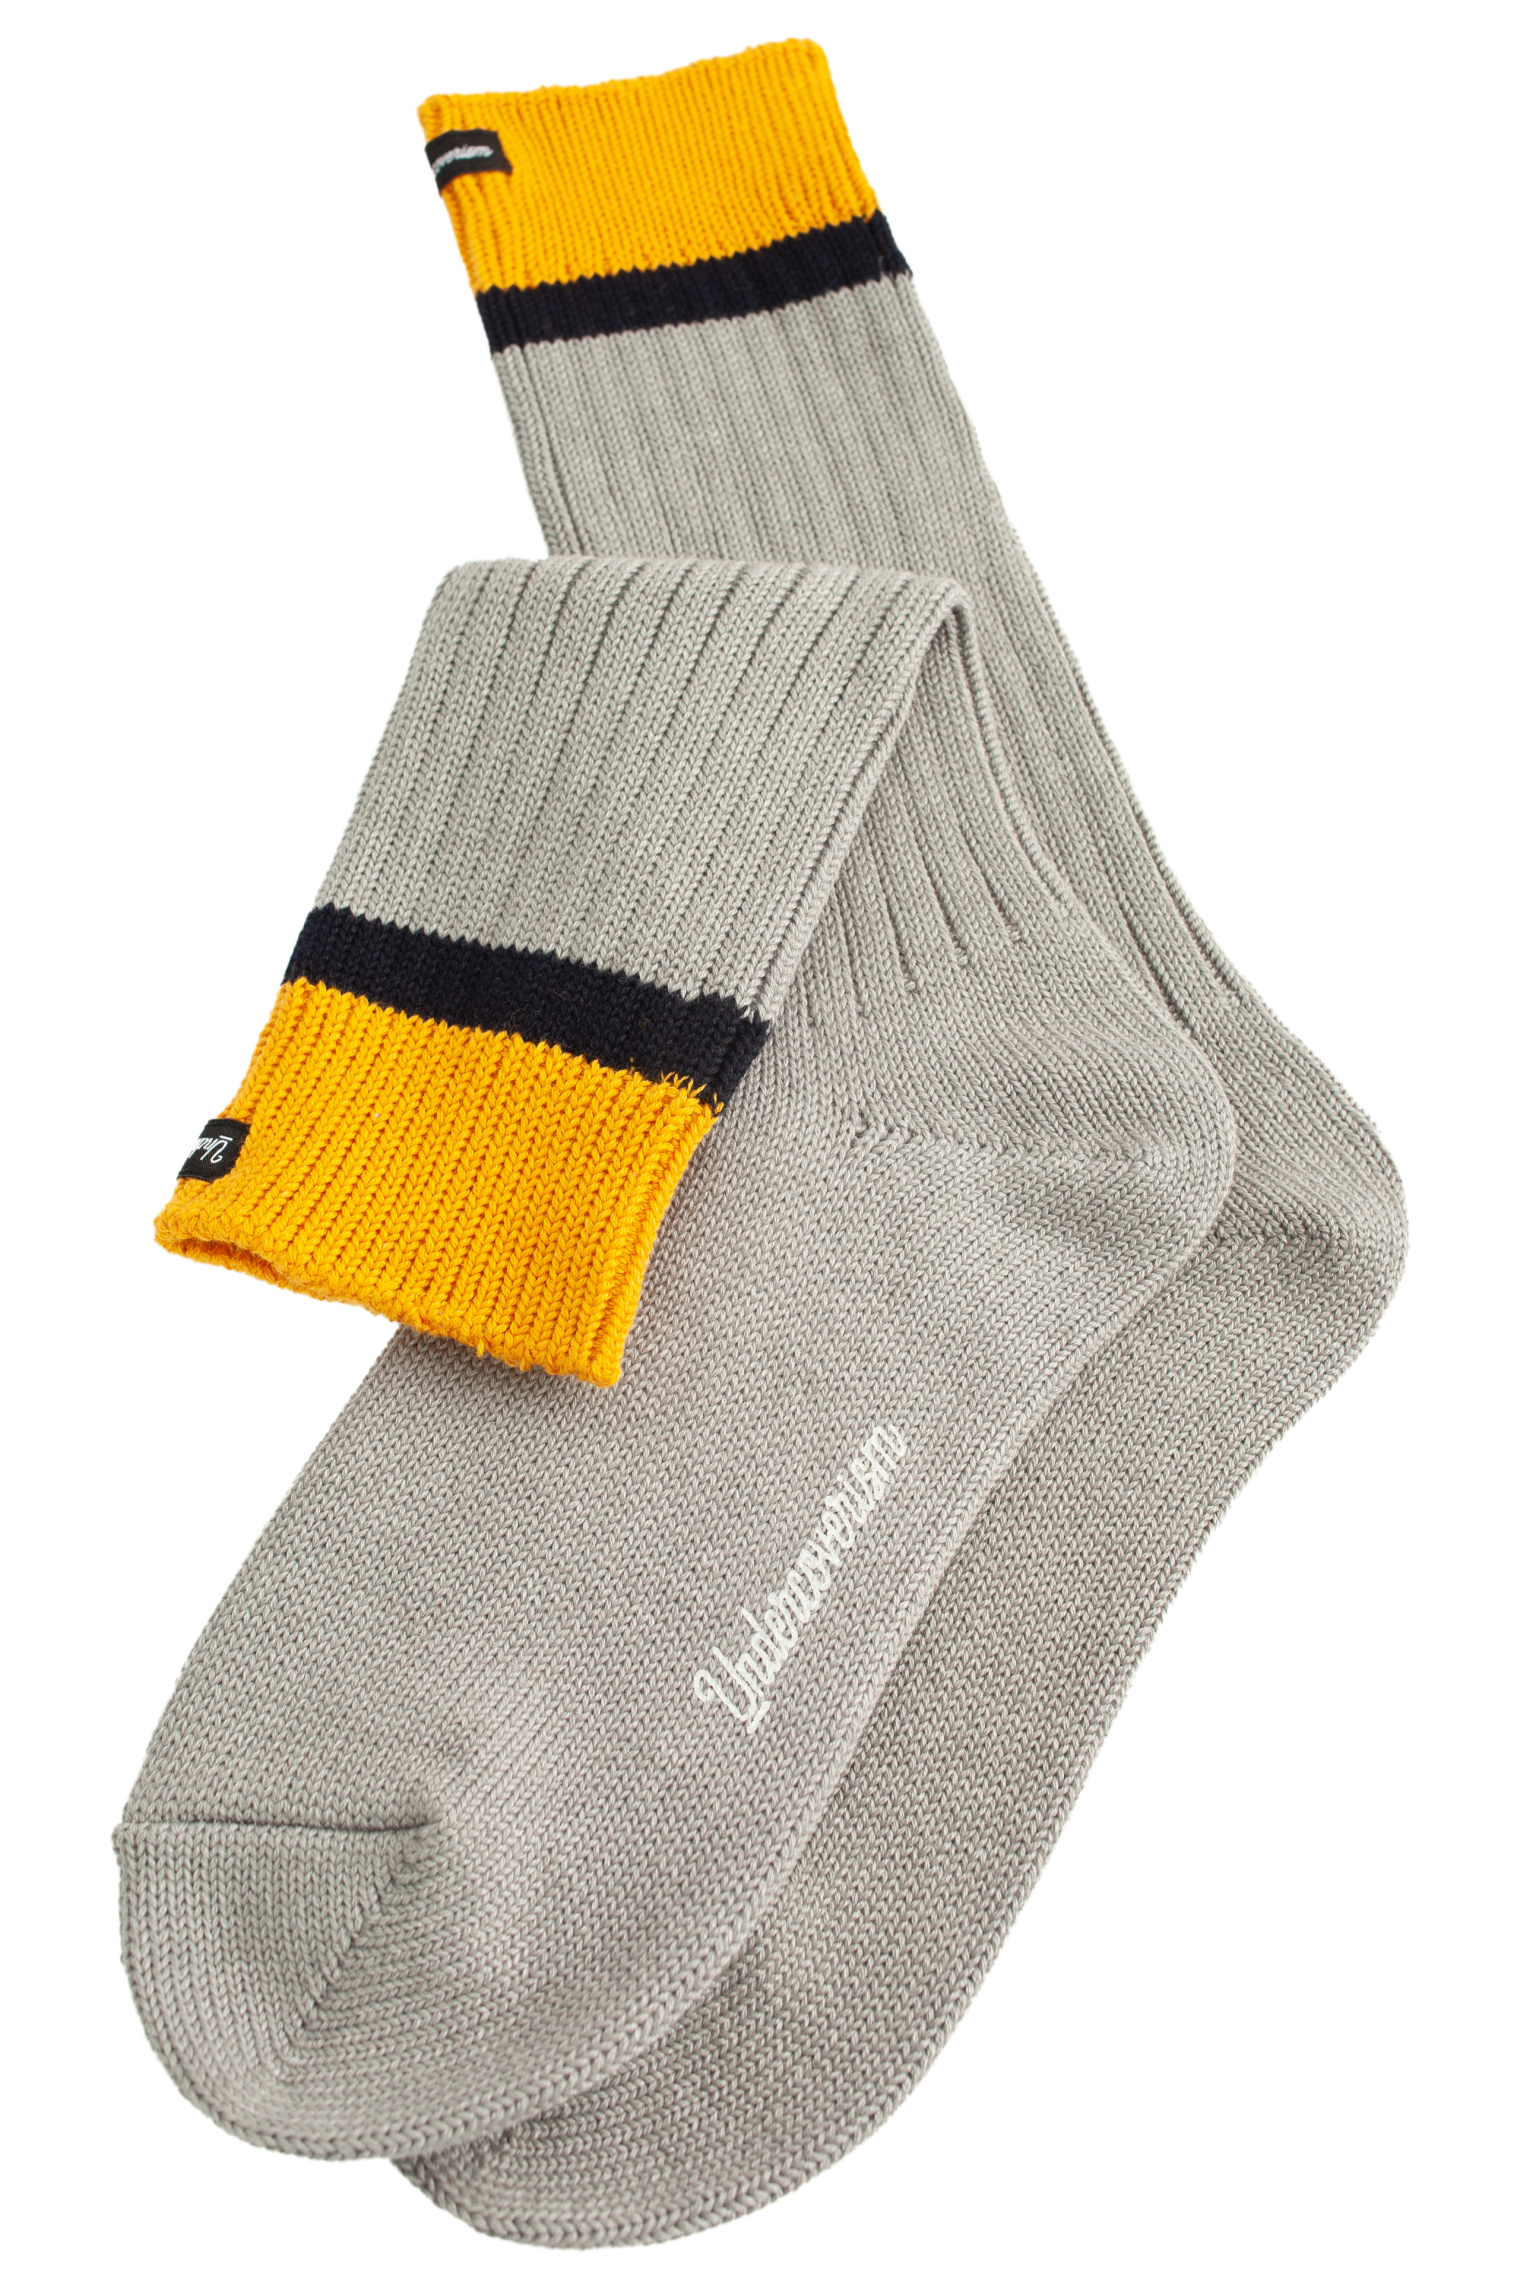 Undercover Grey calf-high knit socks